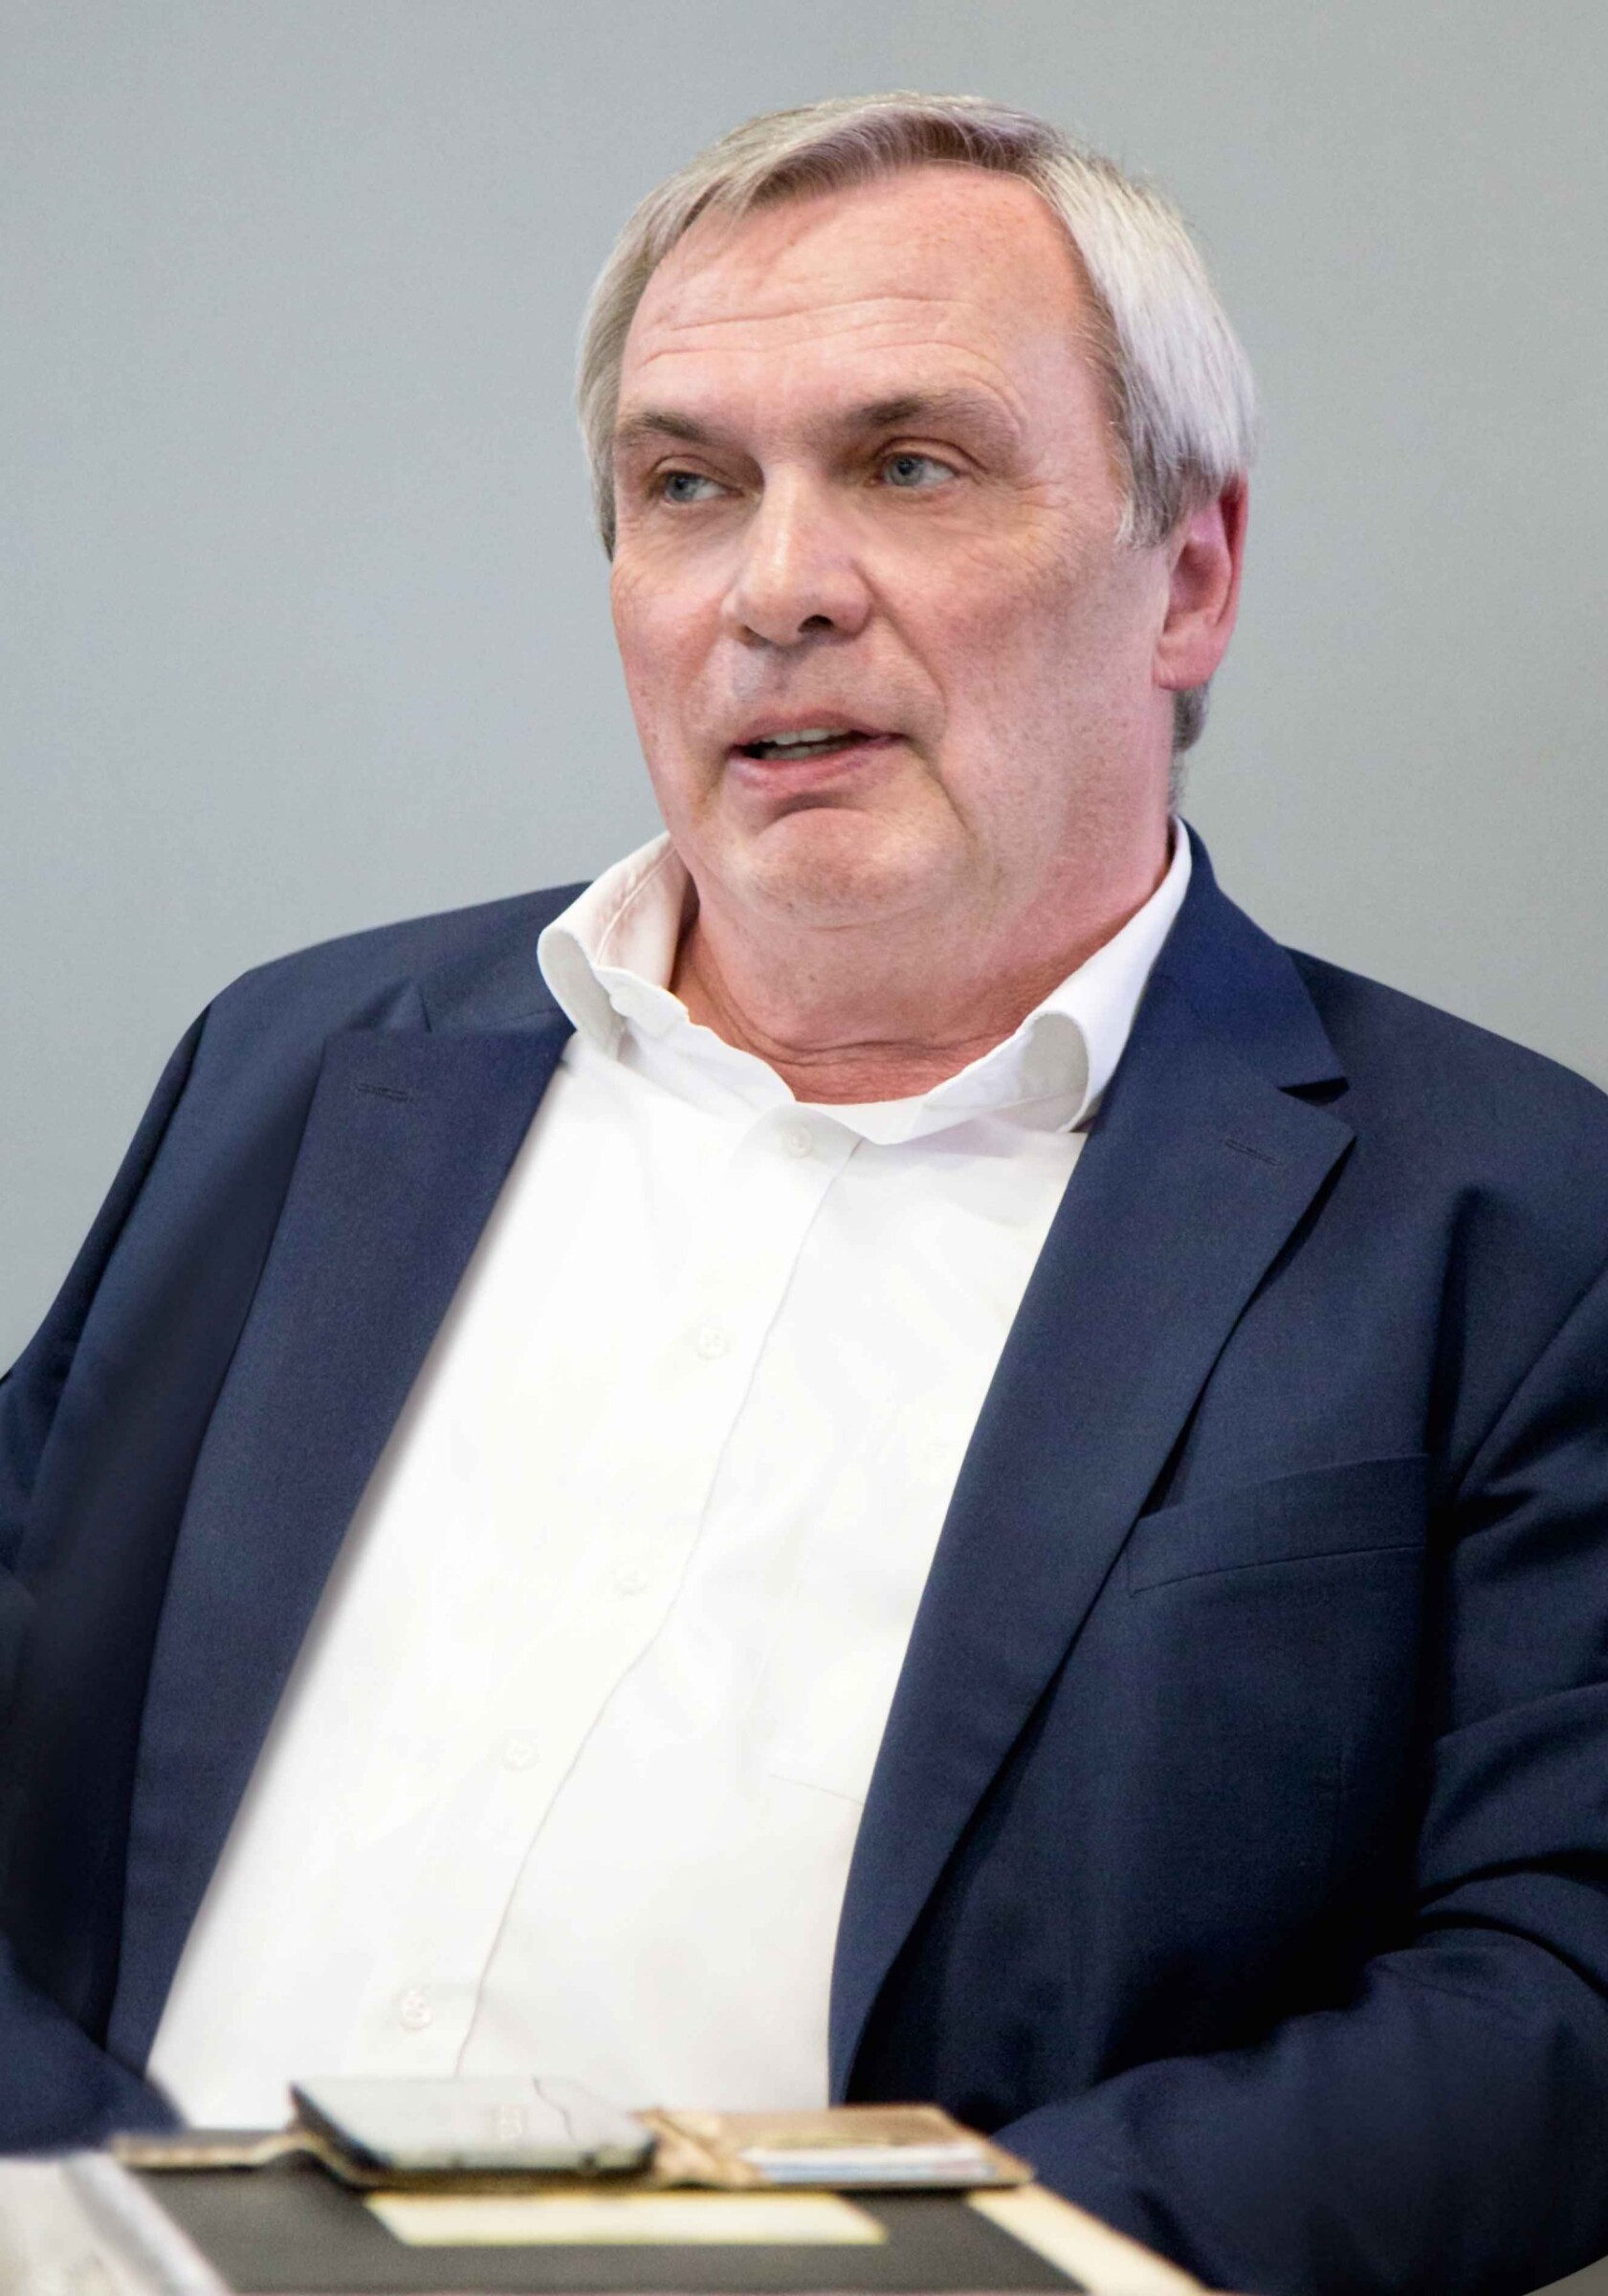 Detlef M. Büll, Managing Director of dealer Büll & Strunz and regional representative for Mitsubishi Electric in Austria.